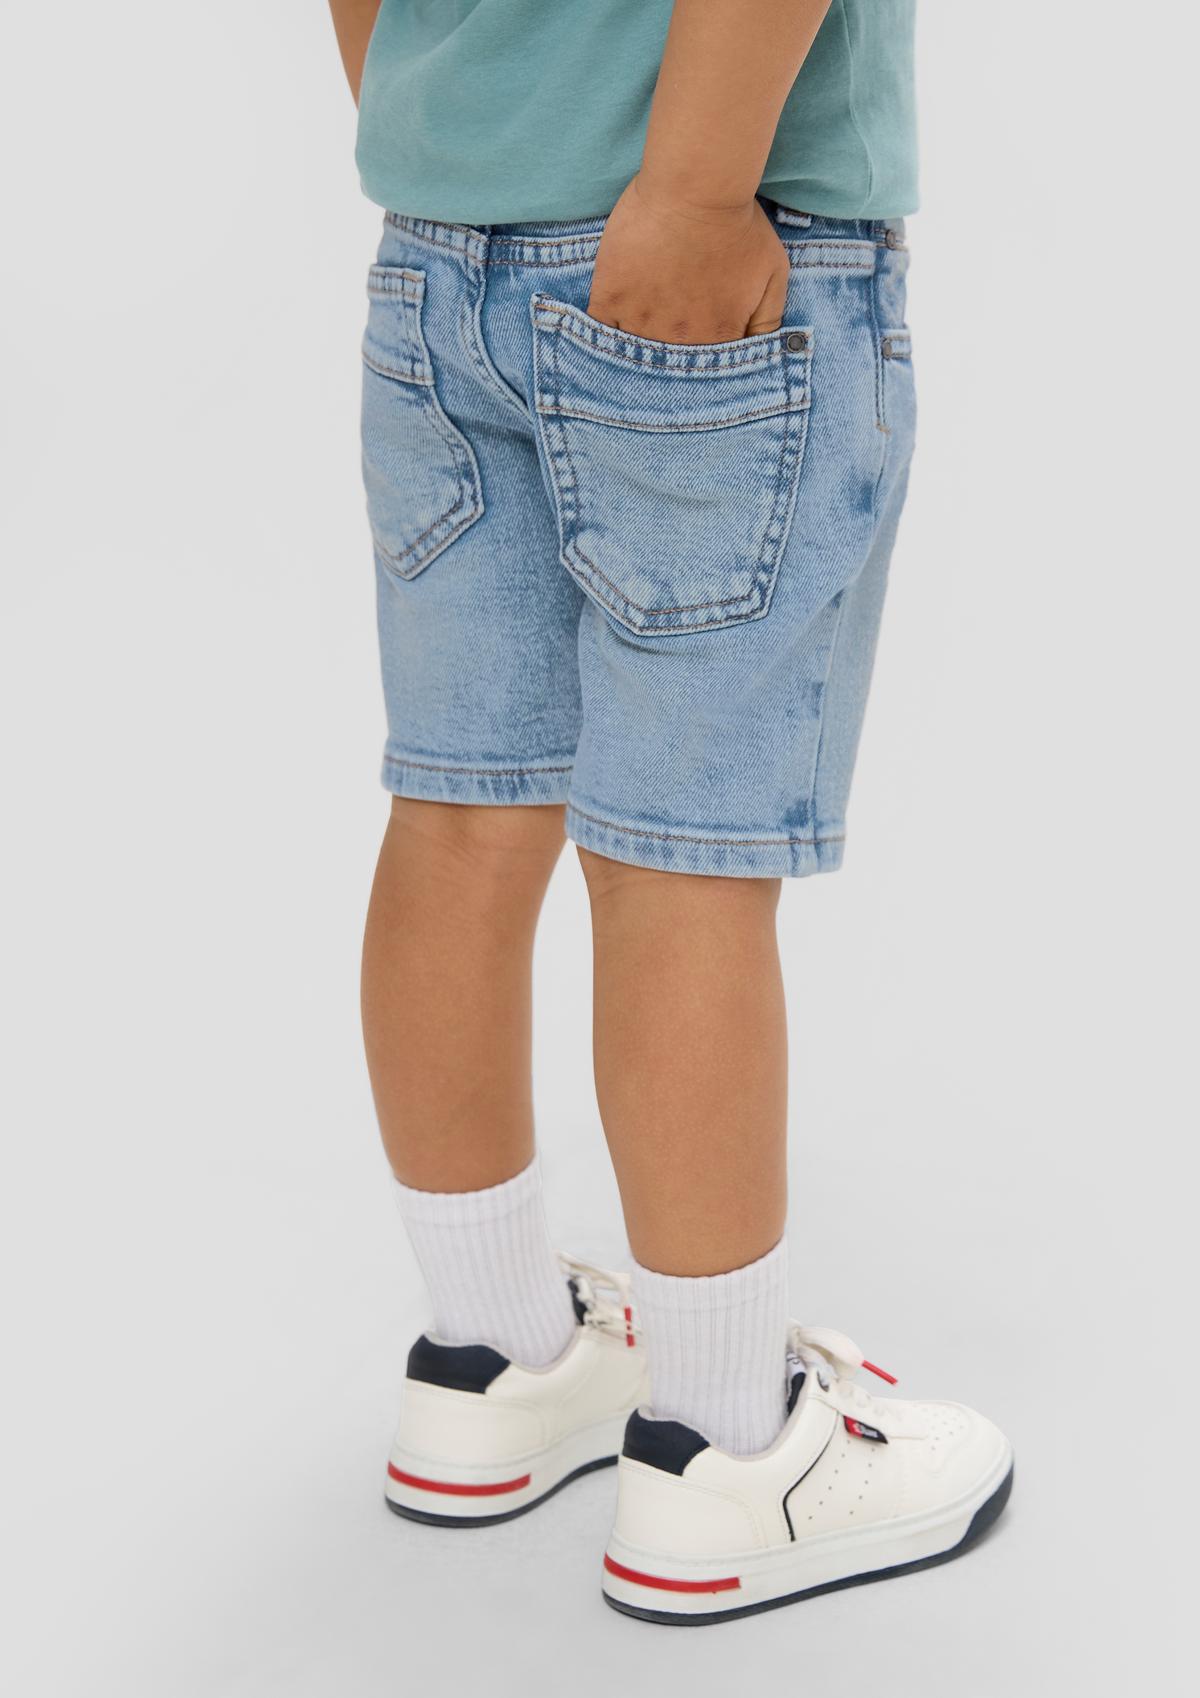 s.Oliver Bermuda Jeans Brad / Slim fit / Mid rise / Slim leg